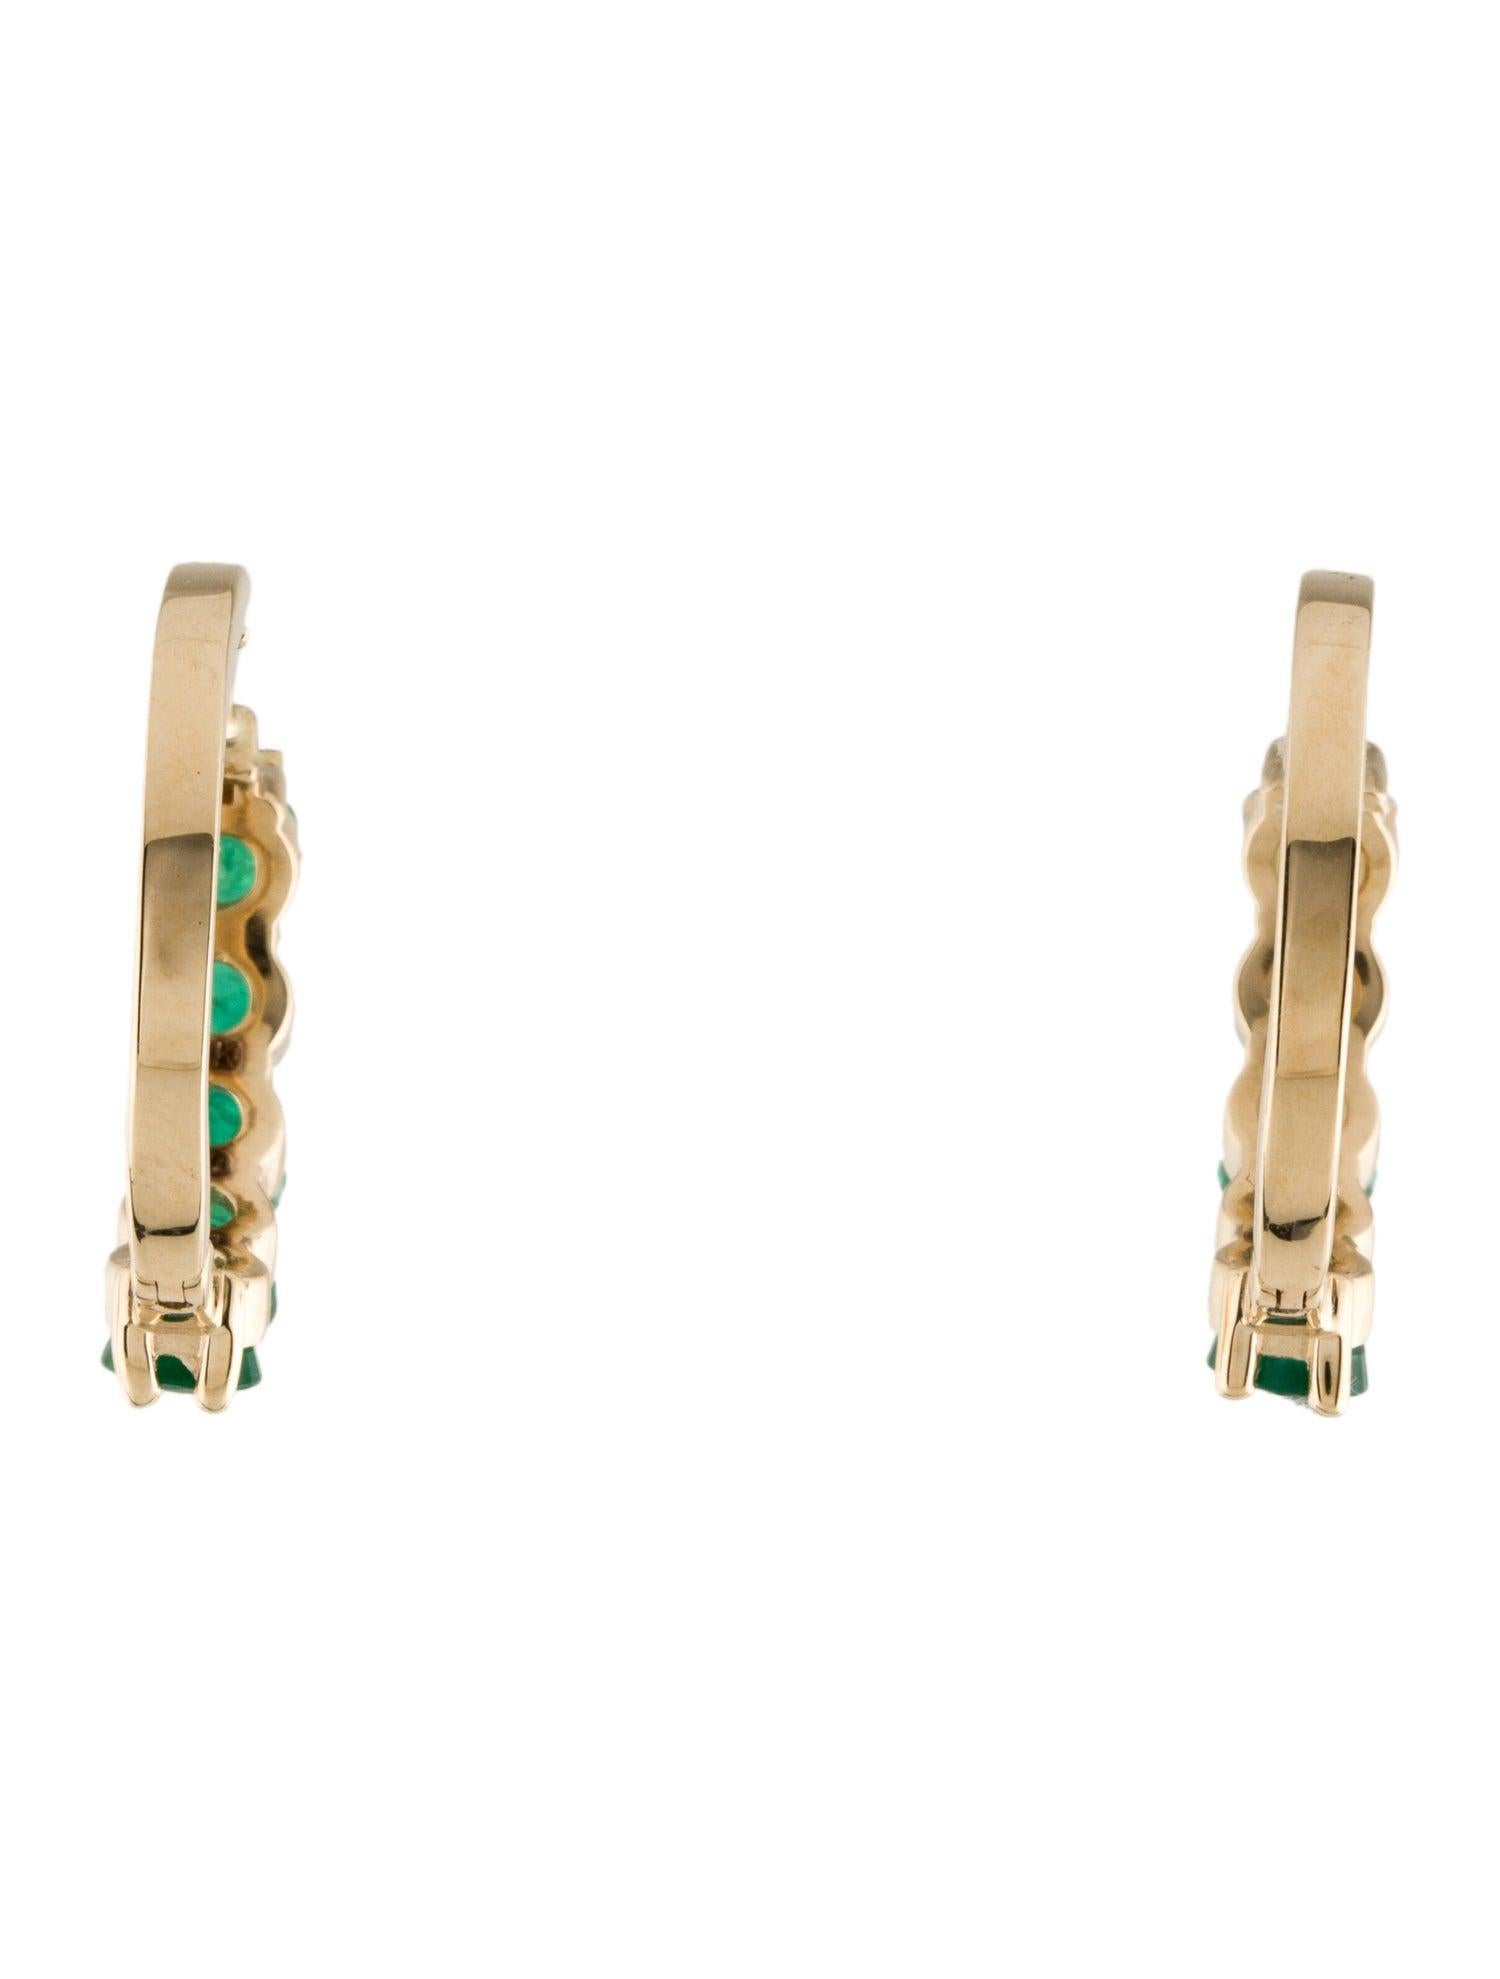 Brilliant Cut 14K Emerald Hoop Earrings - 1.88ctw, Elegant Gemstone Jewelry, Classic Style For Sale